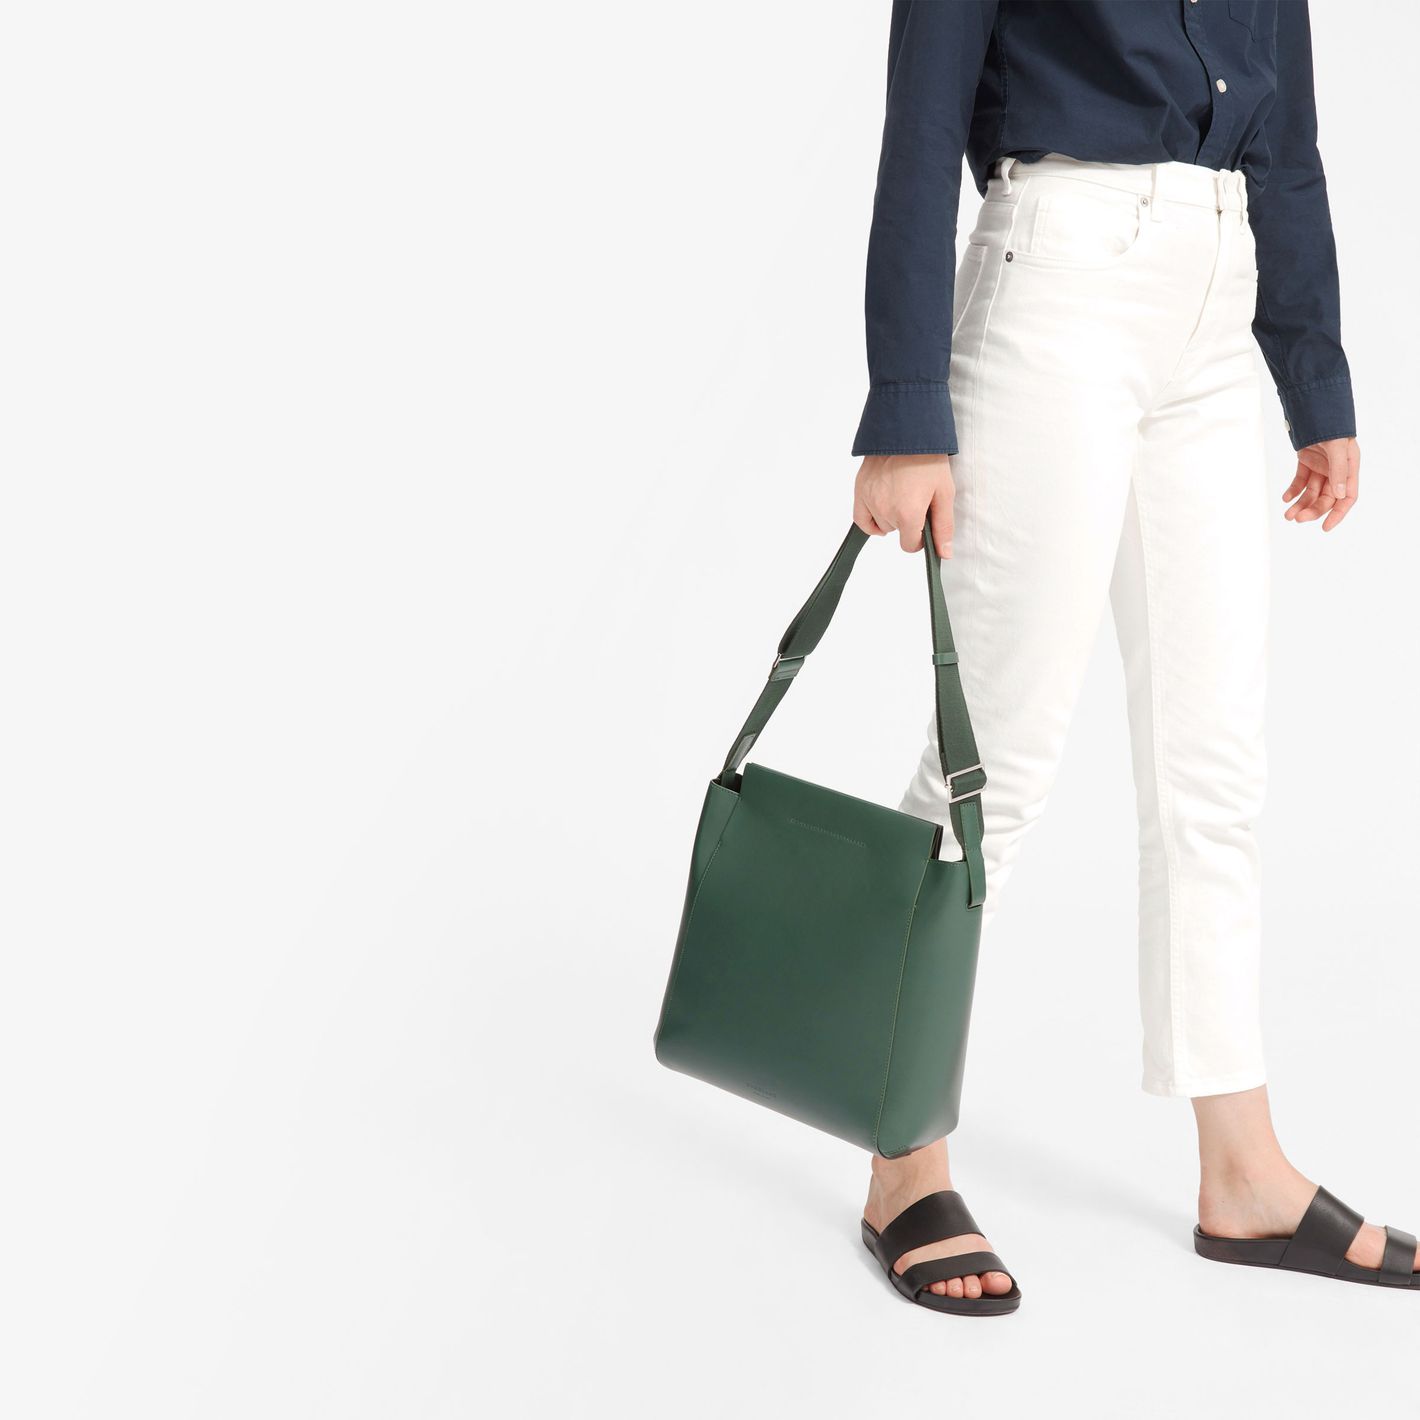 everlane-the-form-bag-review  Minimalist bag, Bags, Work fashion